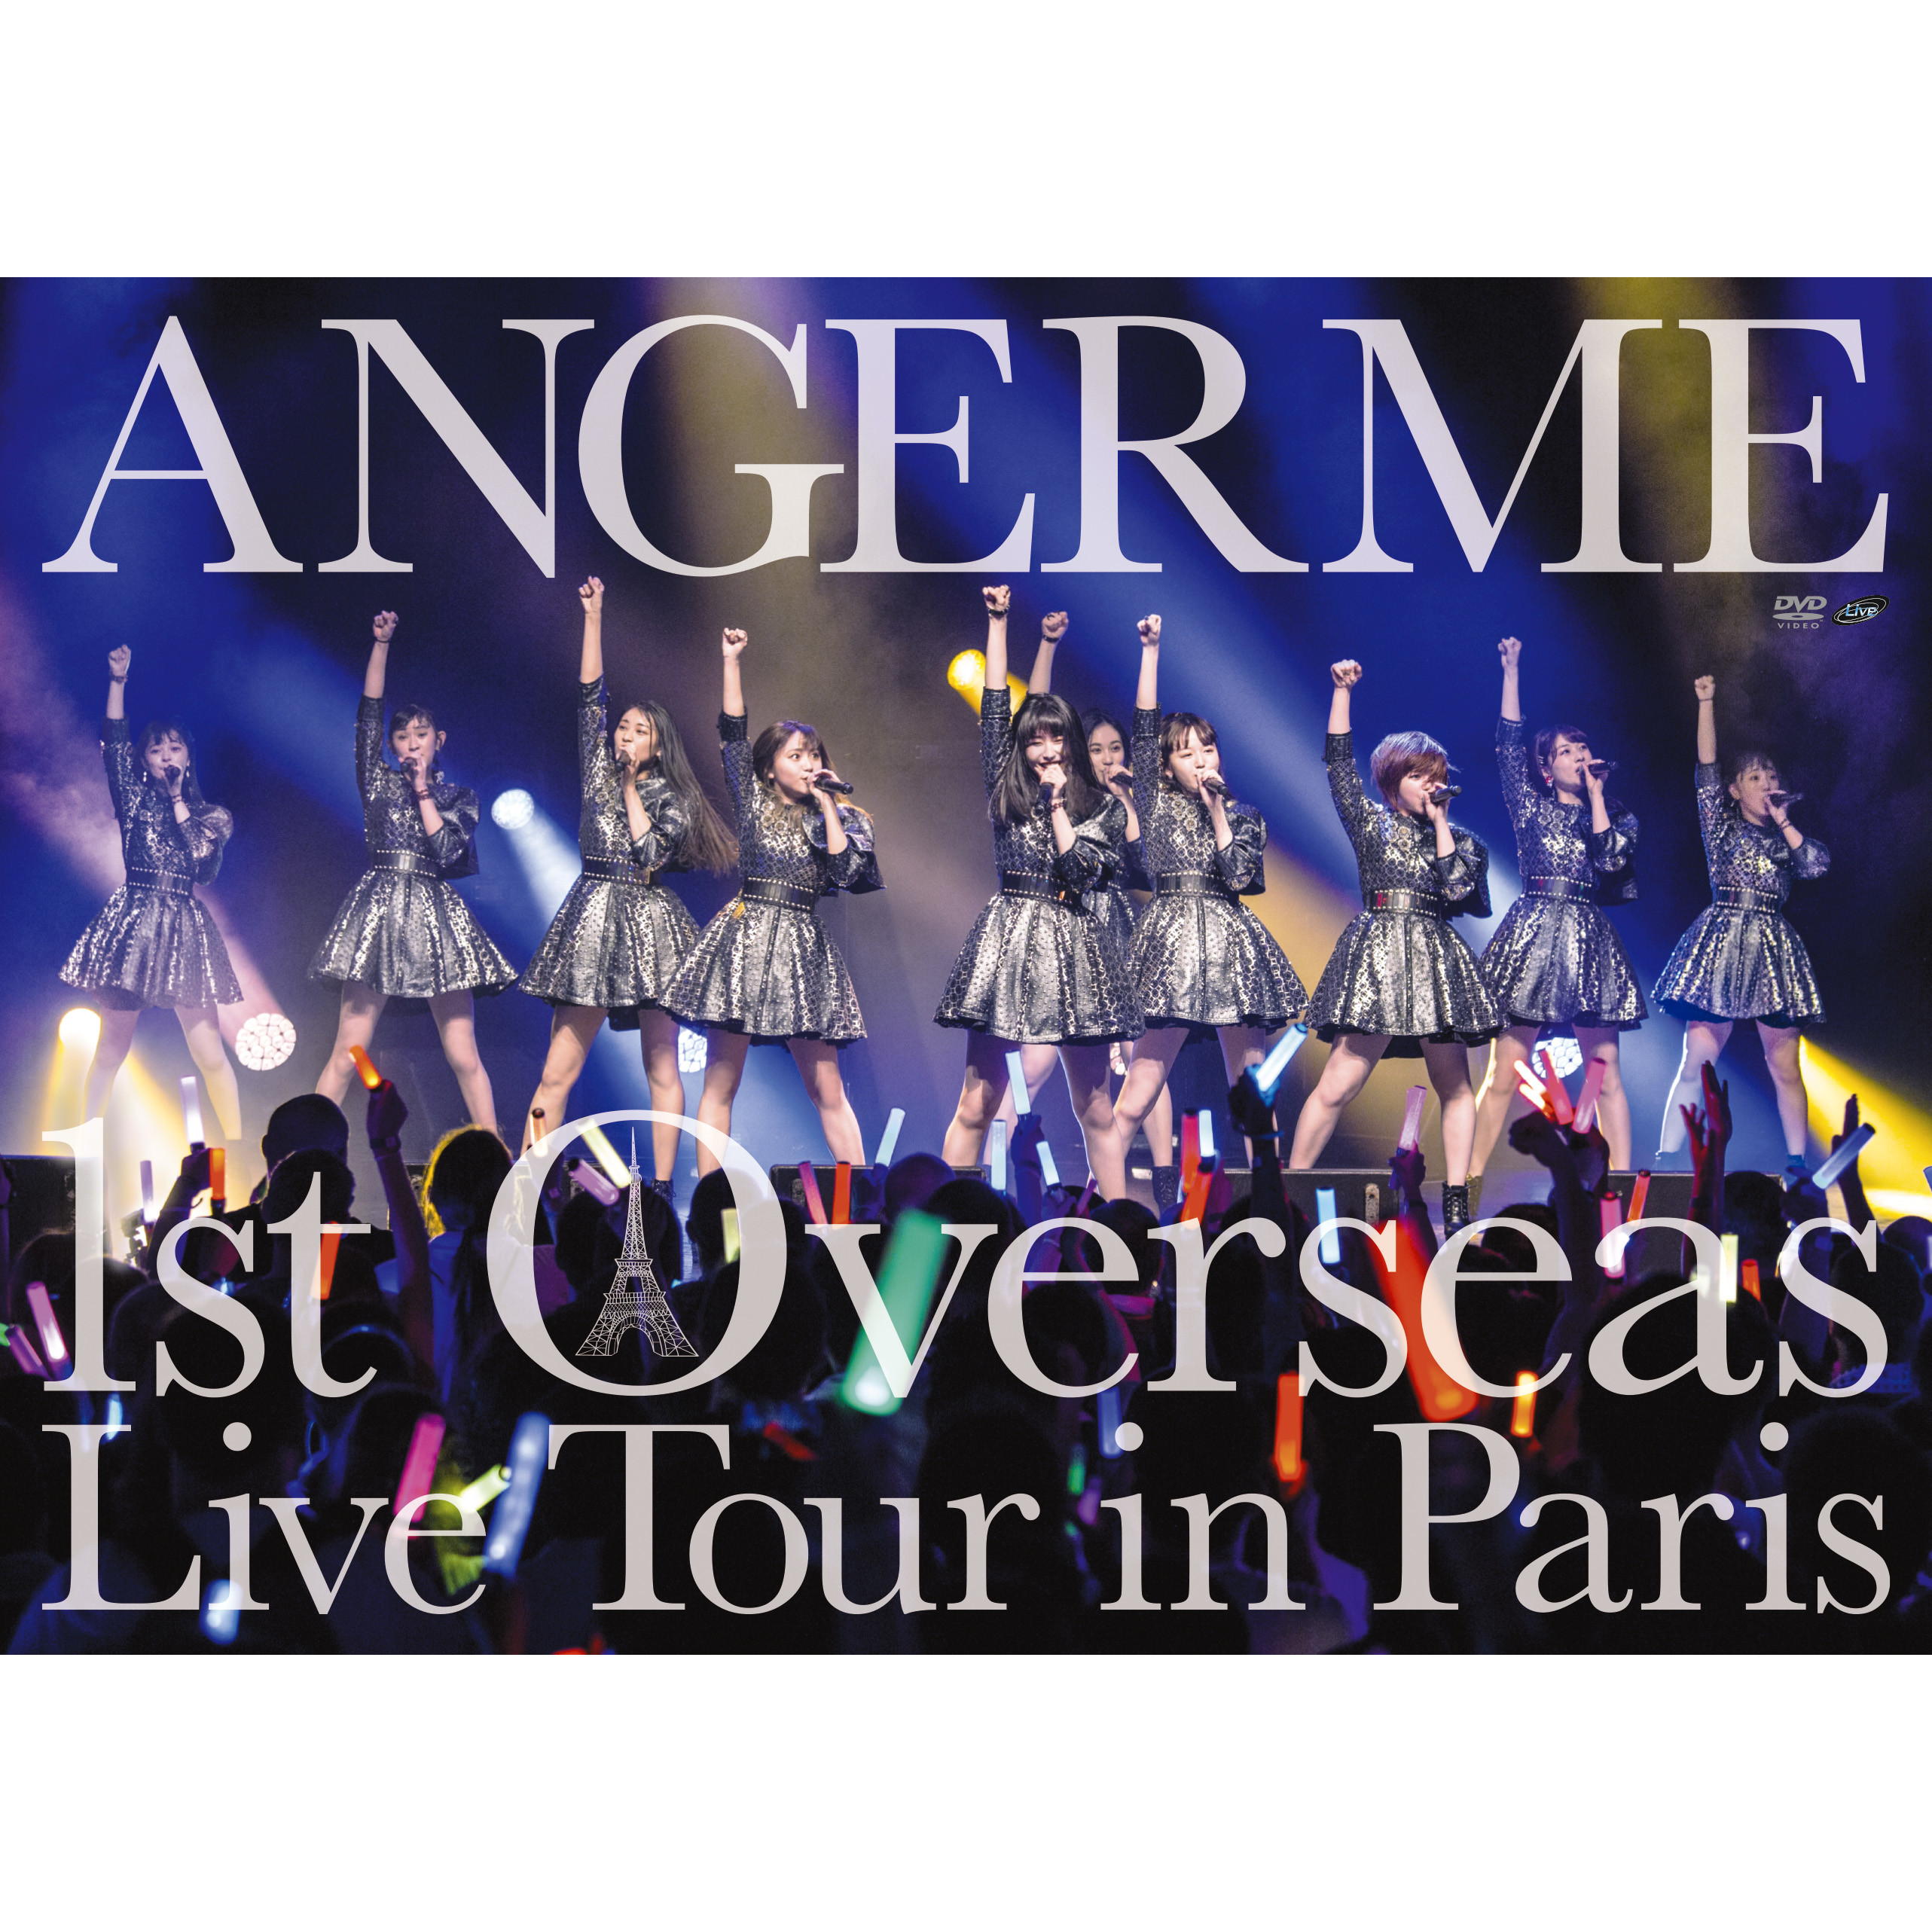 DVD「ANGERME 1st Overseas Live Tour in Paris」